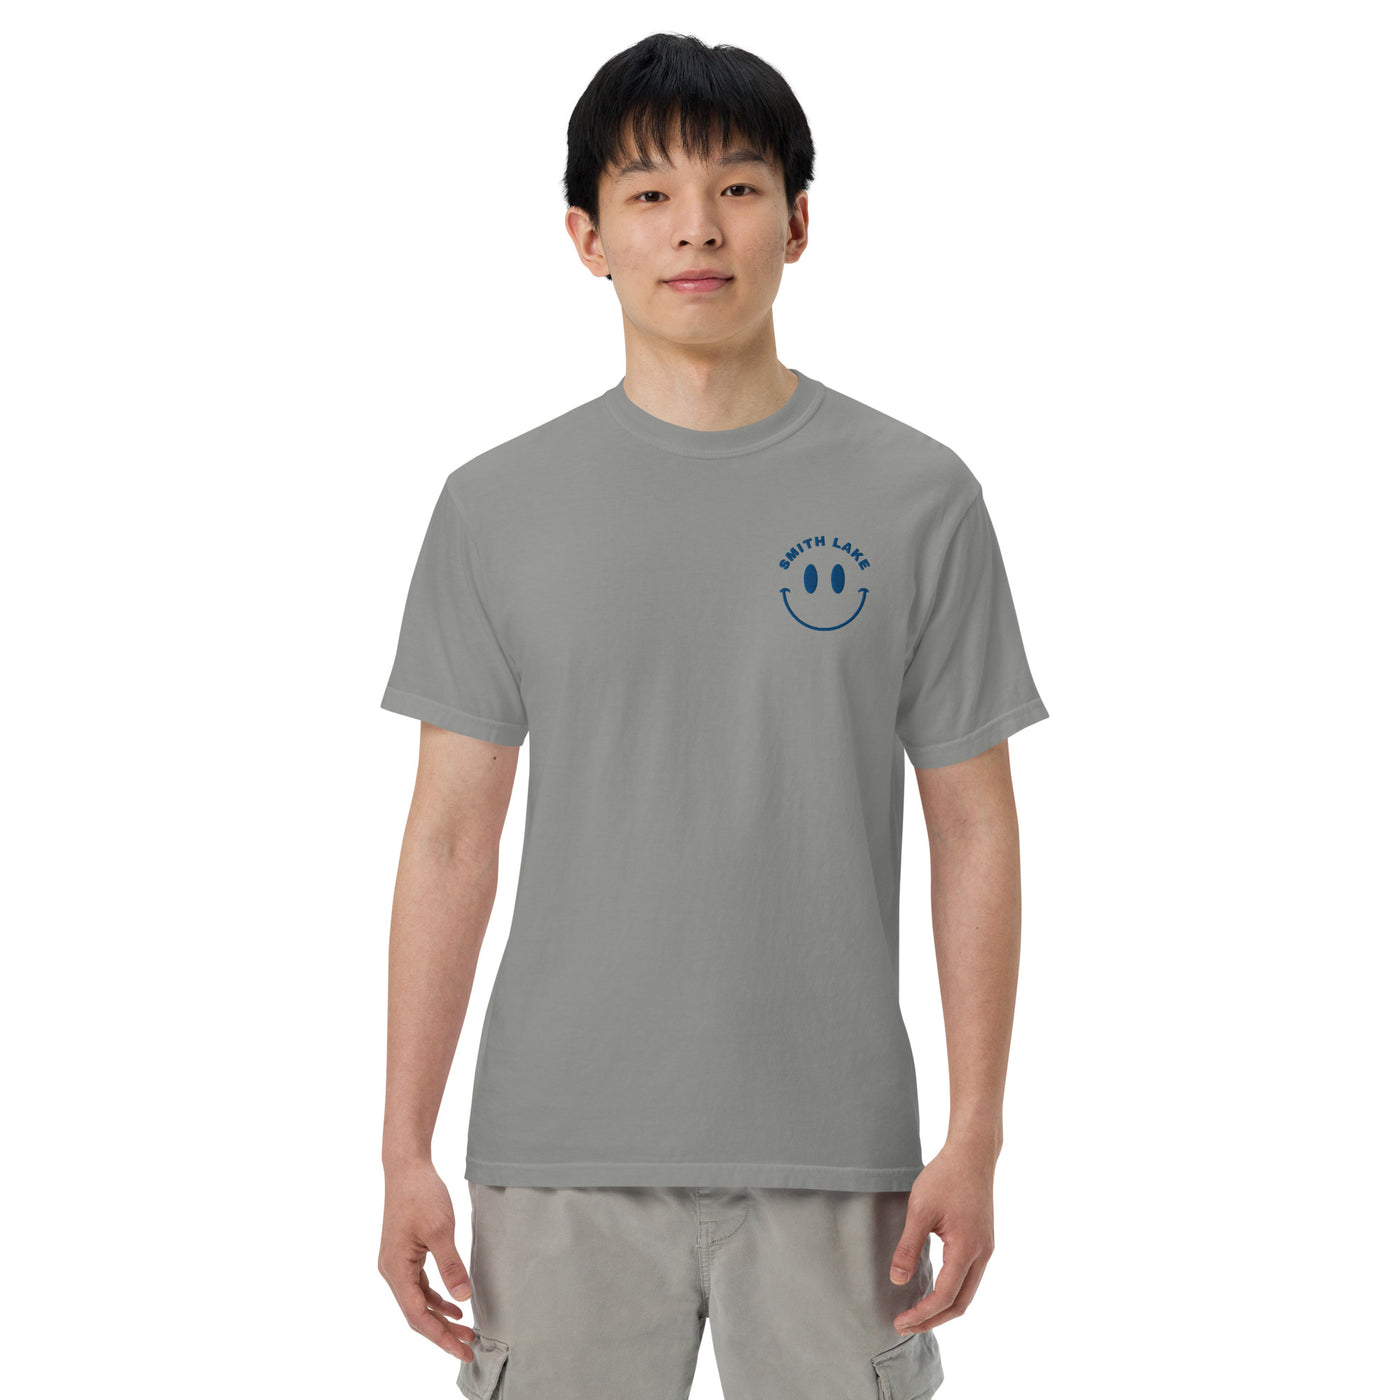 Smith Lake Embroidered T-Shirt T-Shirts Ezra's Clothing Grey S 